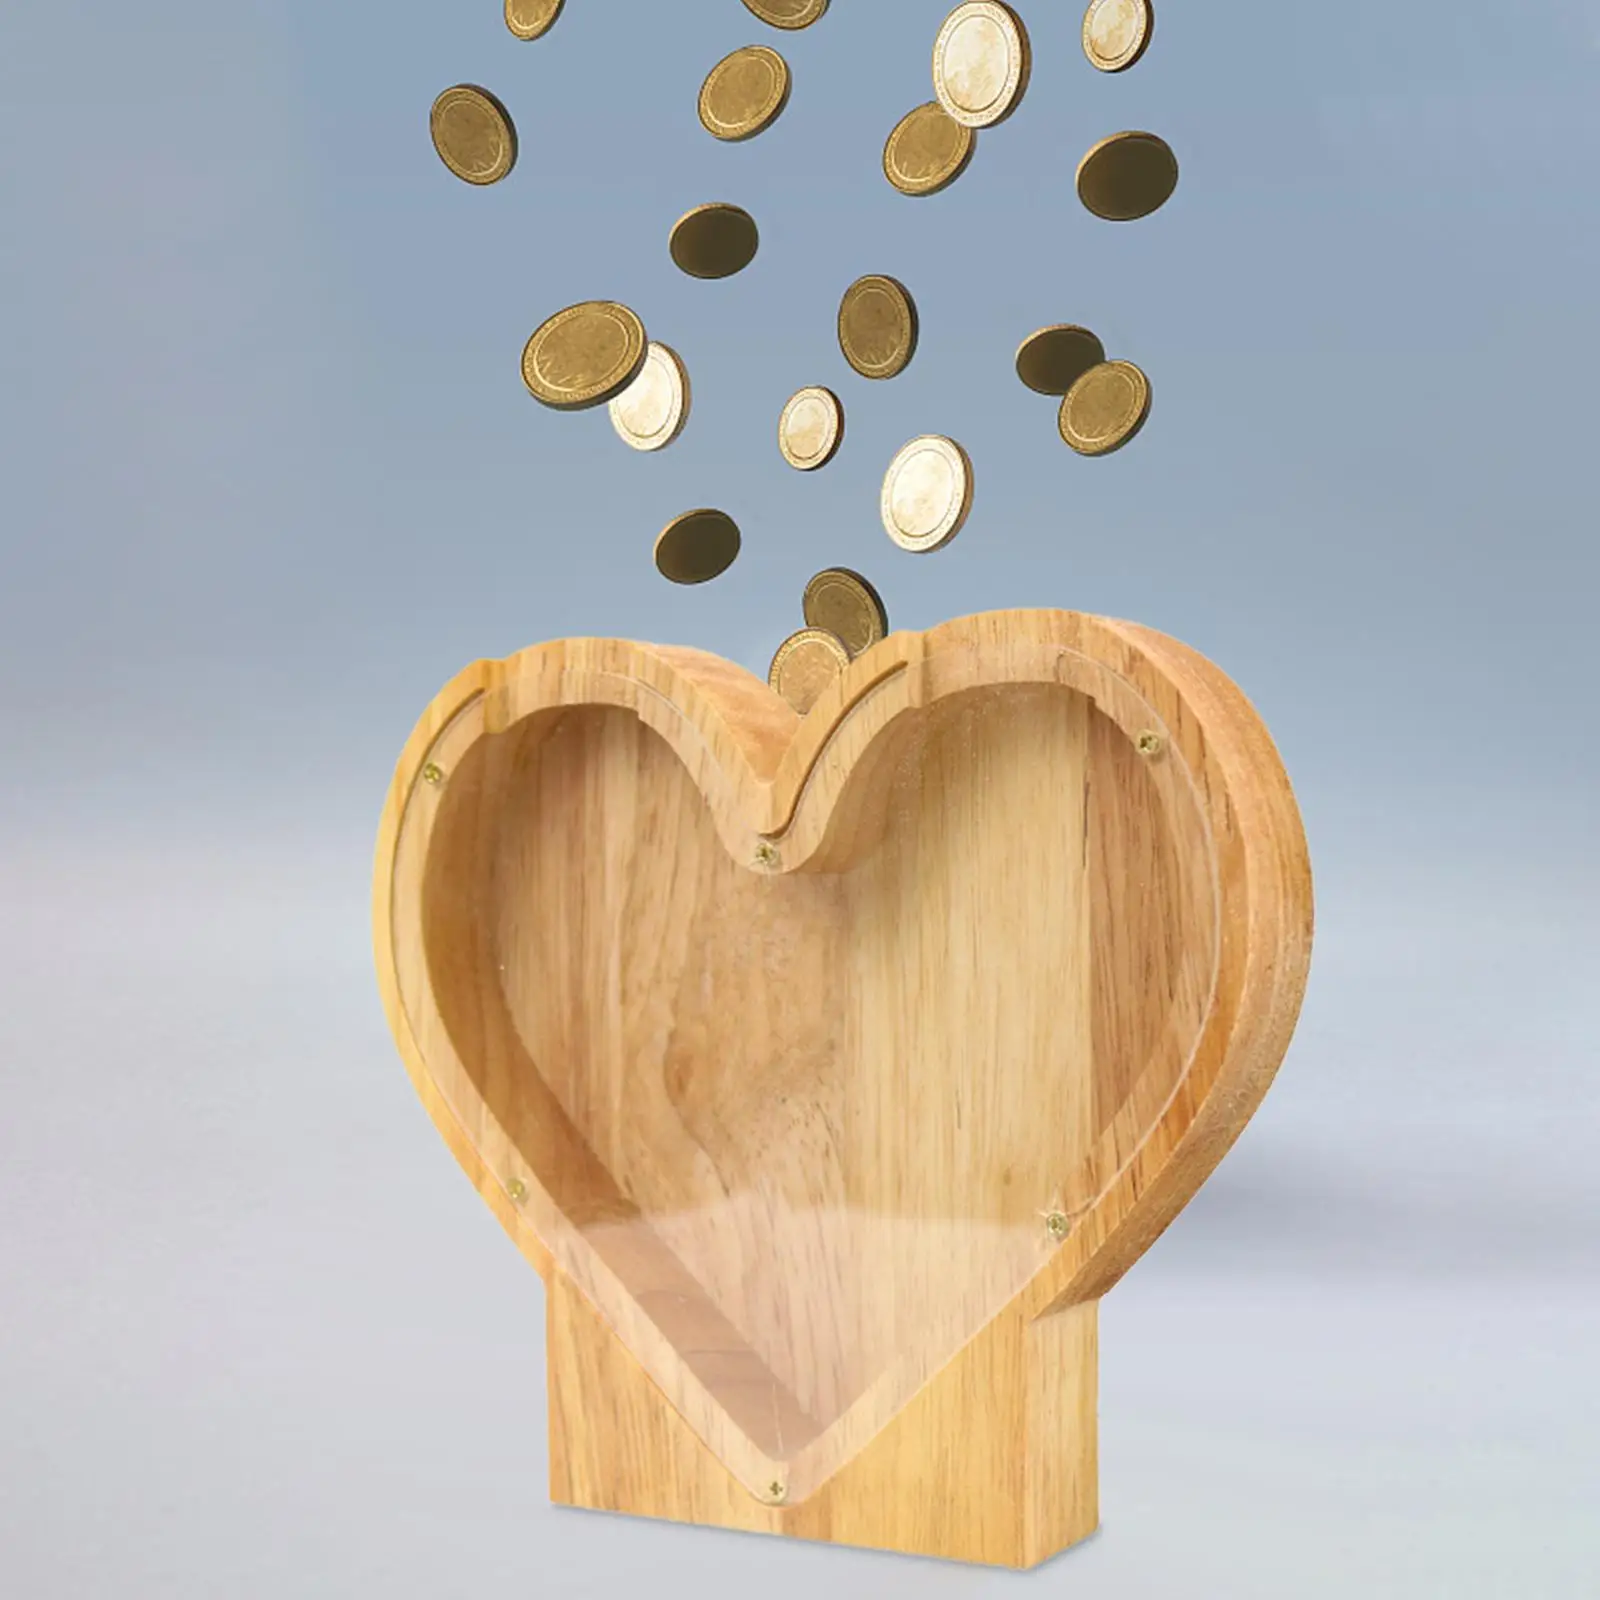 Wooden Piggy Bank Heart Shaped Ornaments Decorative Positive Behavior Saving Box for Bookshelf Tabletop Bedroom Cabinet Office